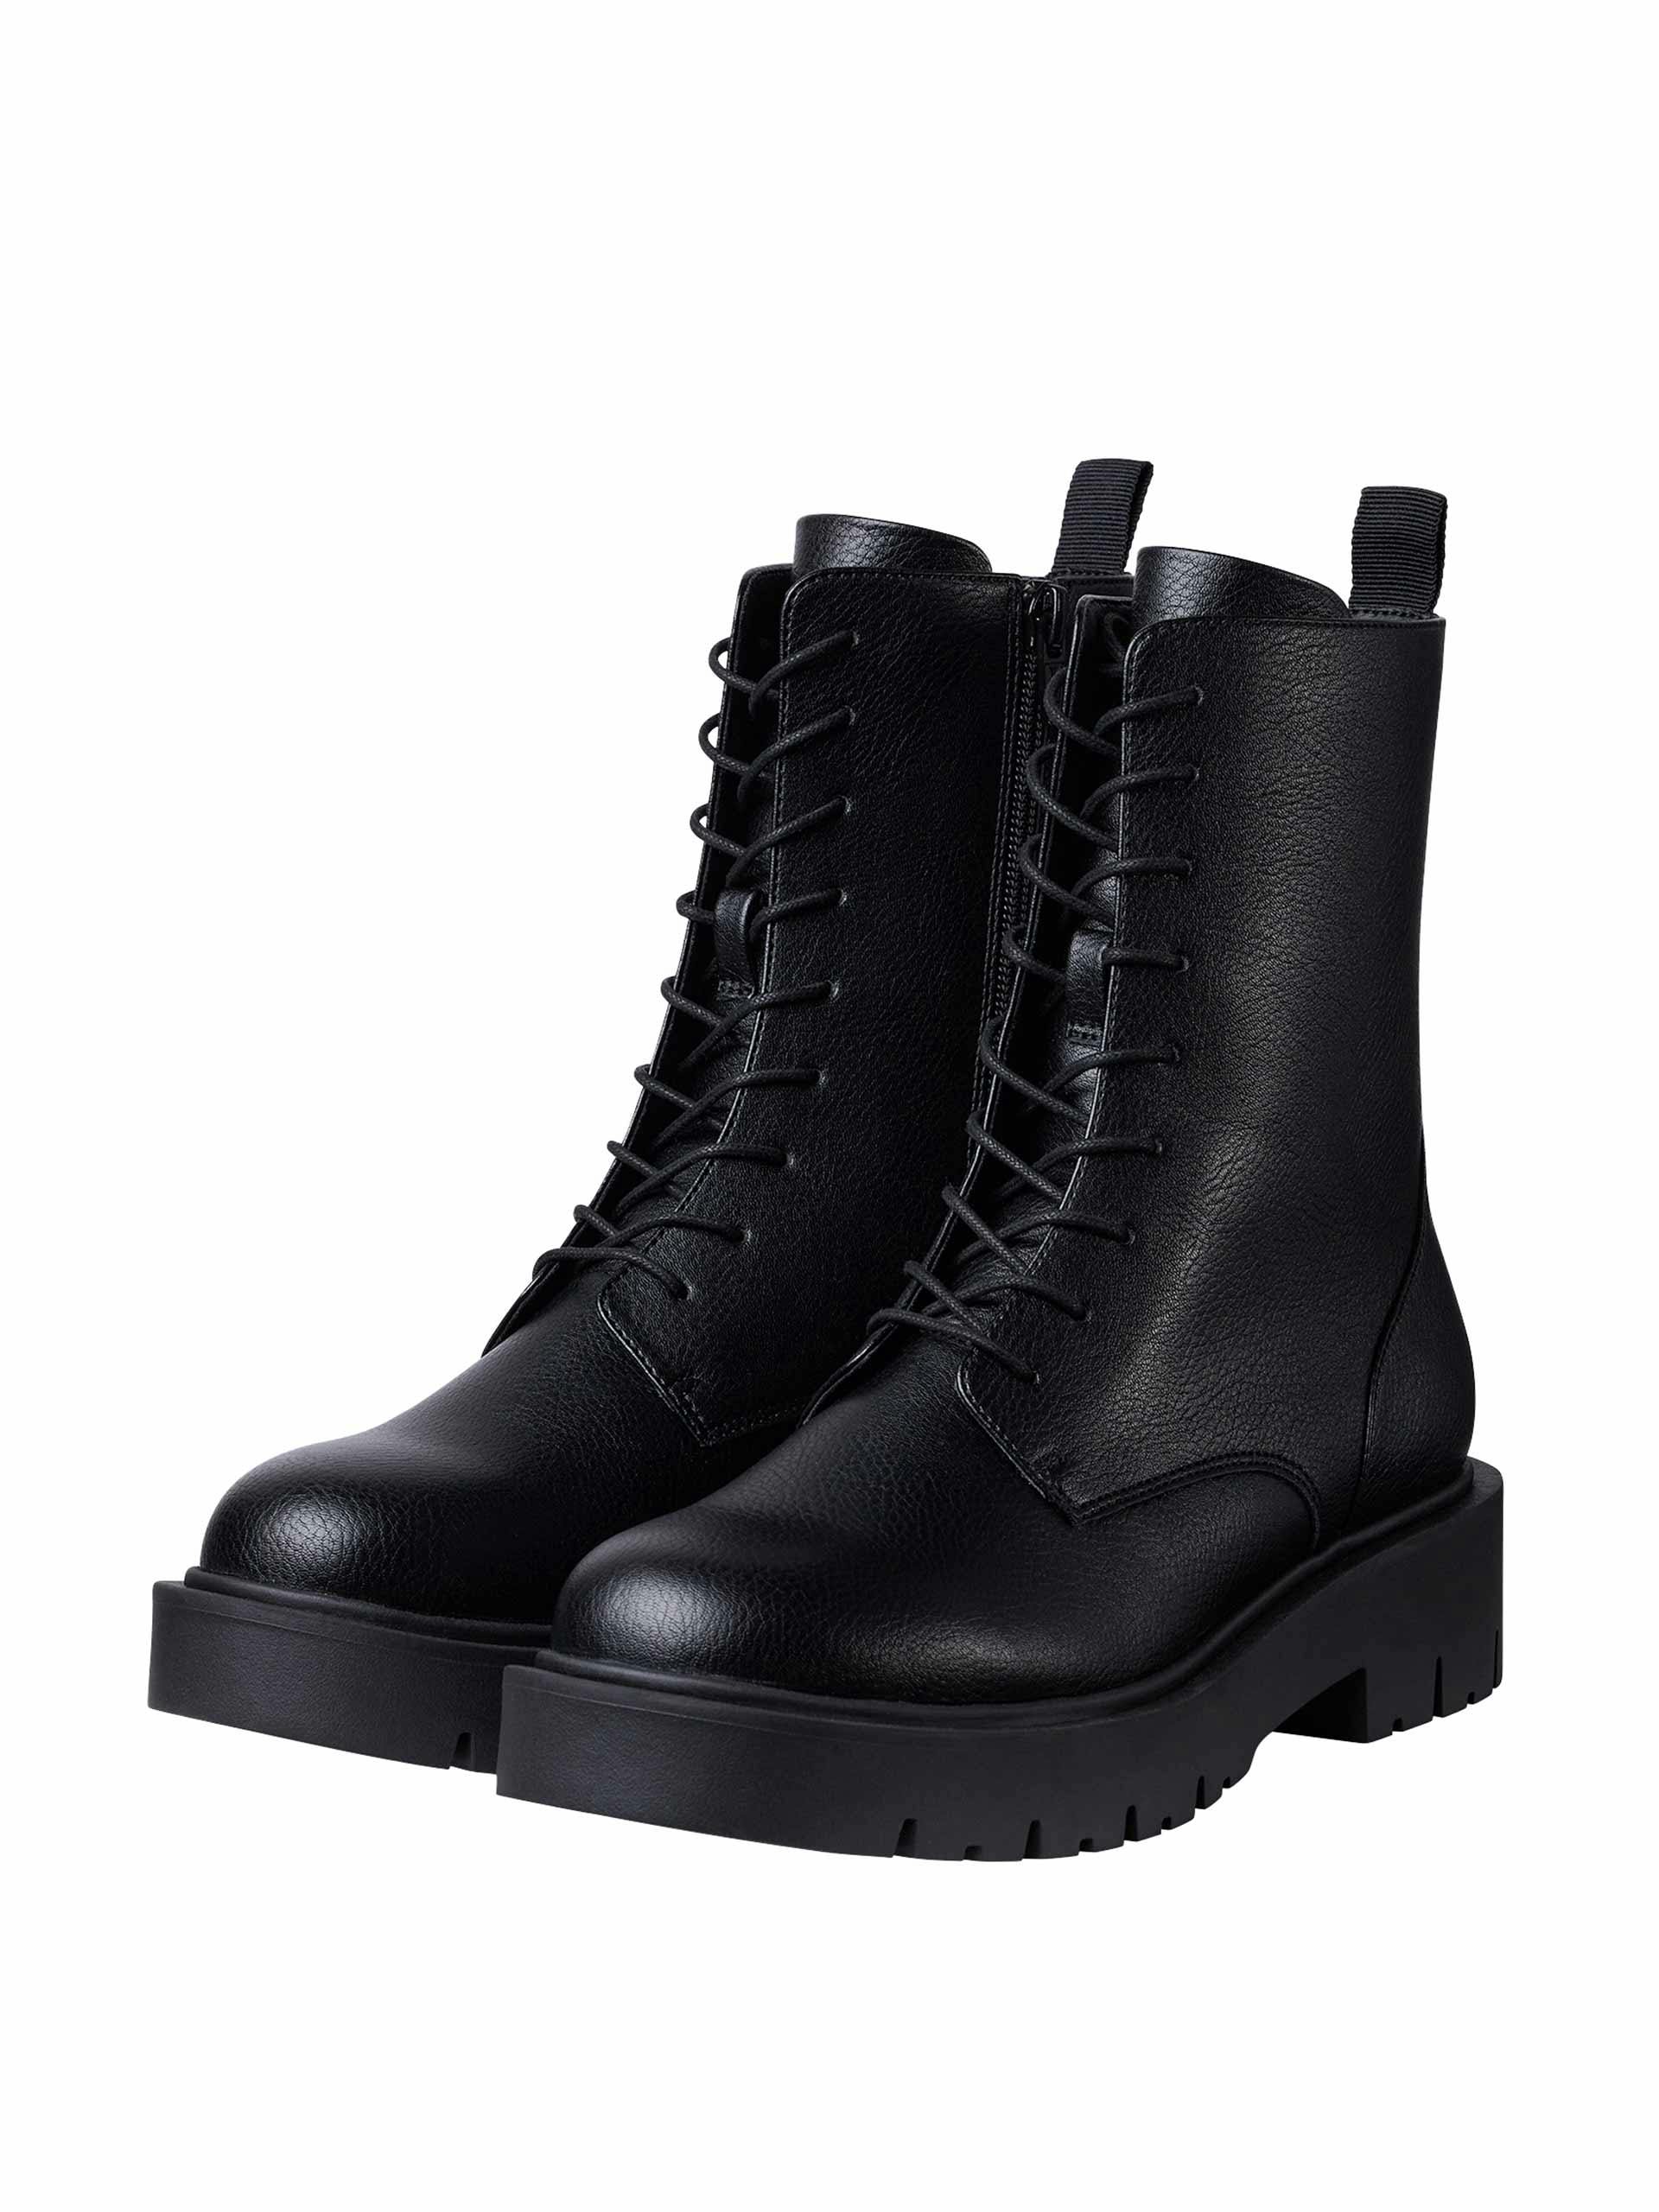 Black lace up short boots